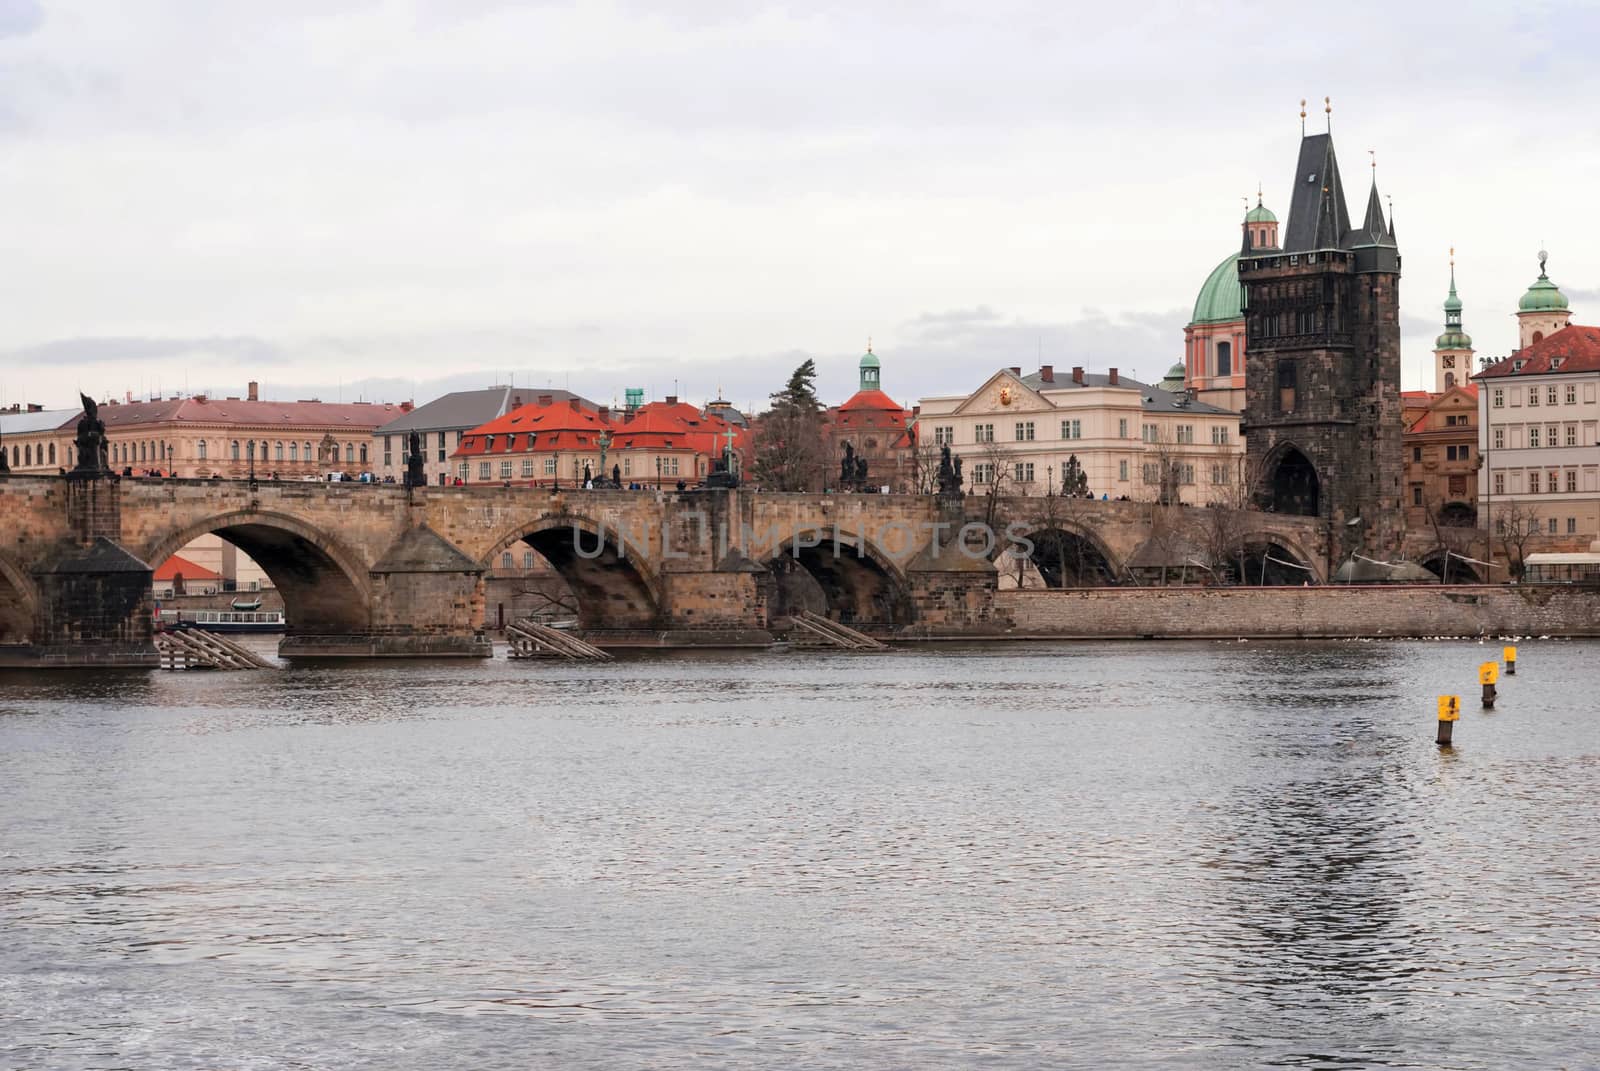 Charles Bridge and the Vltava River, Prague, Czech Republic by Zhukow